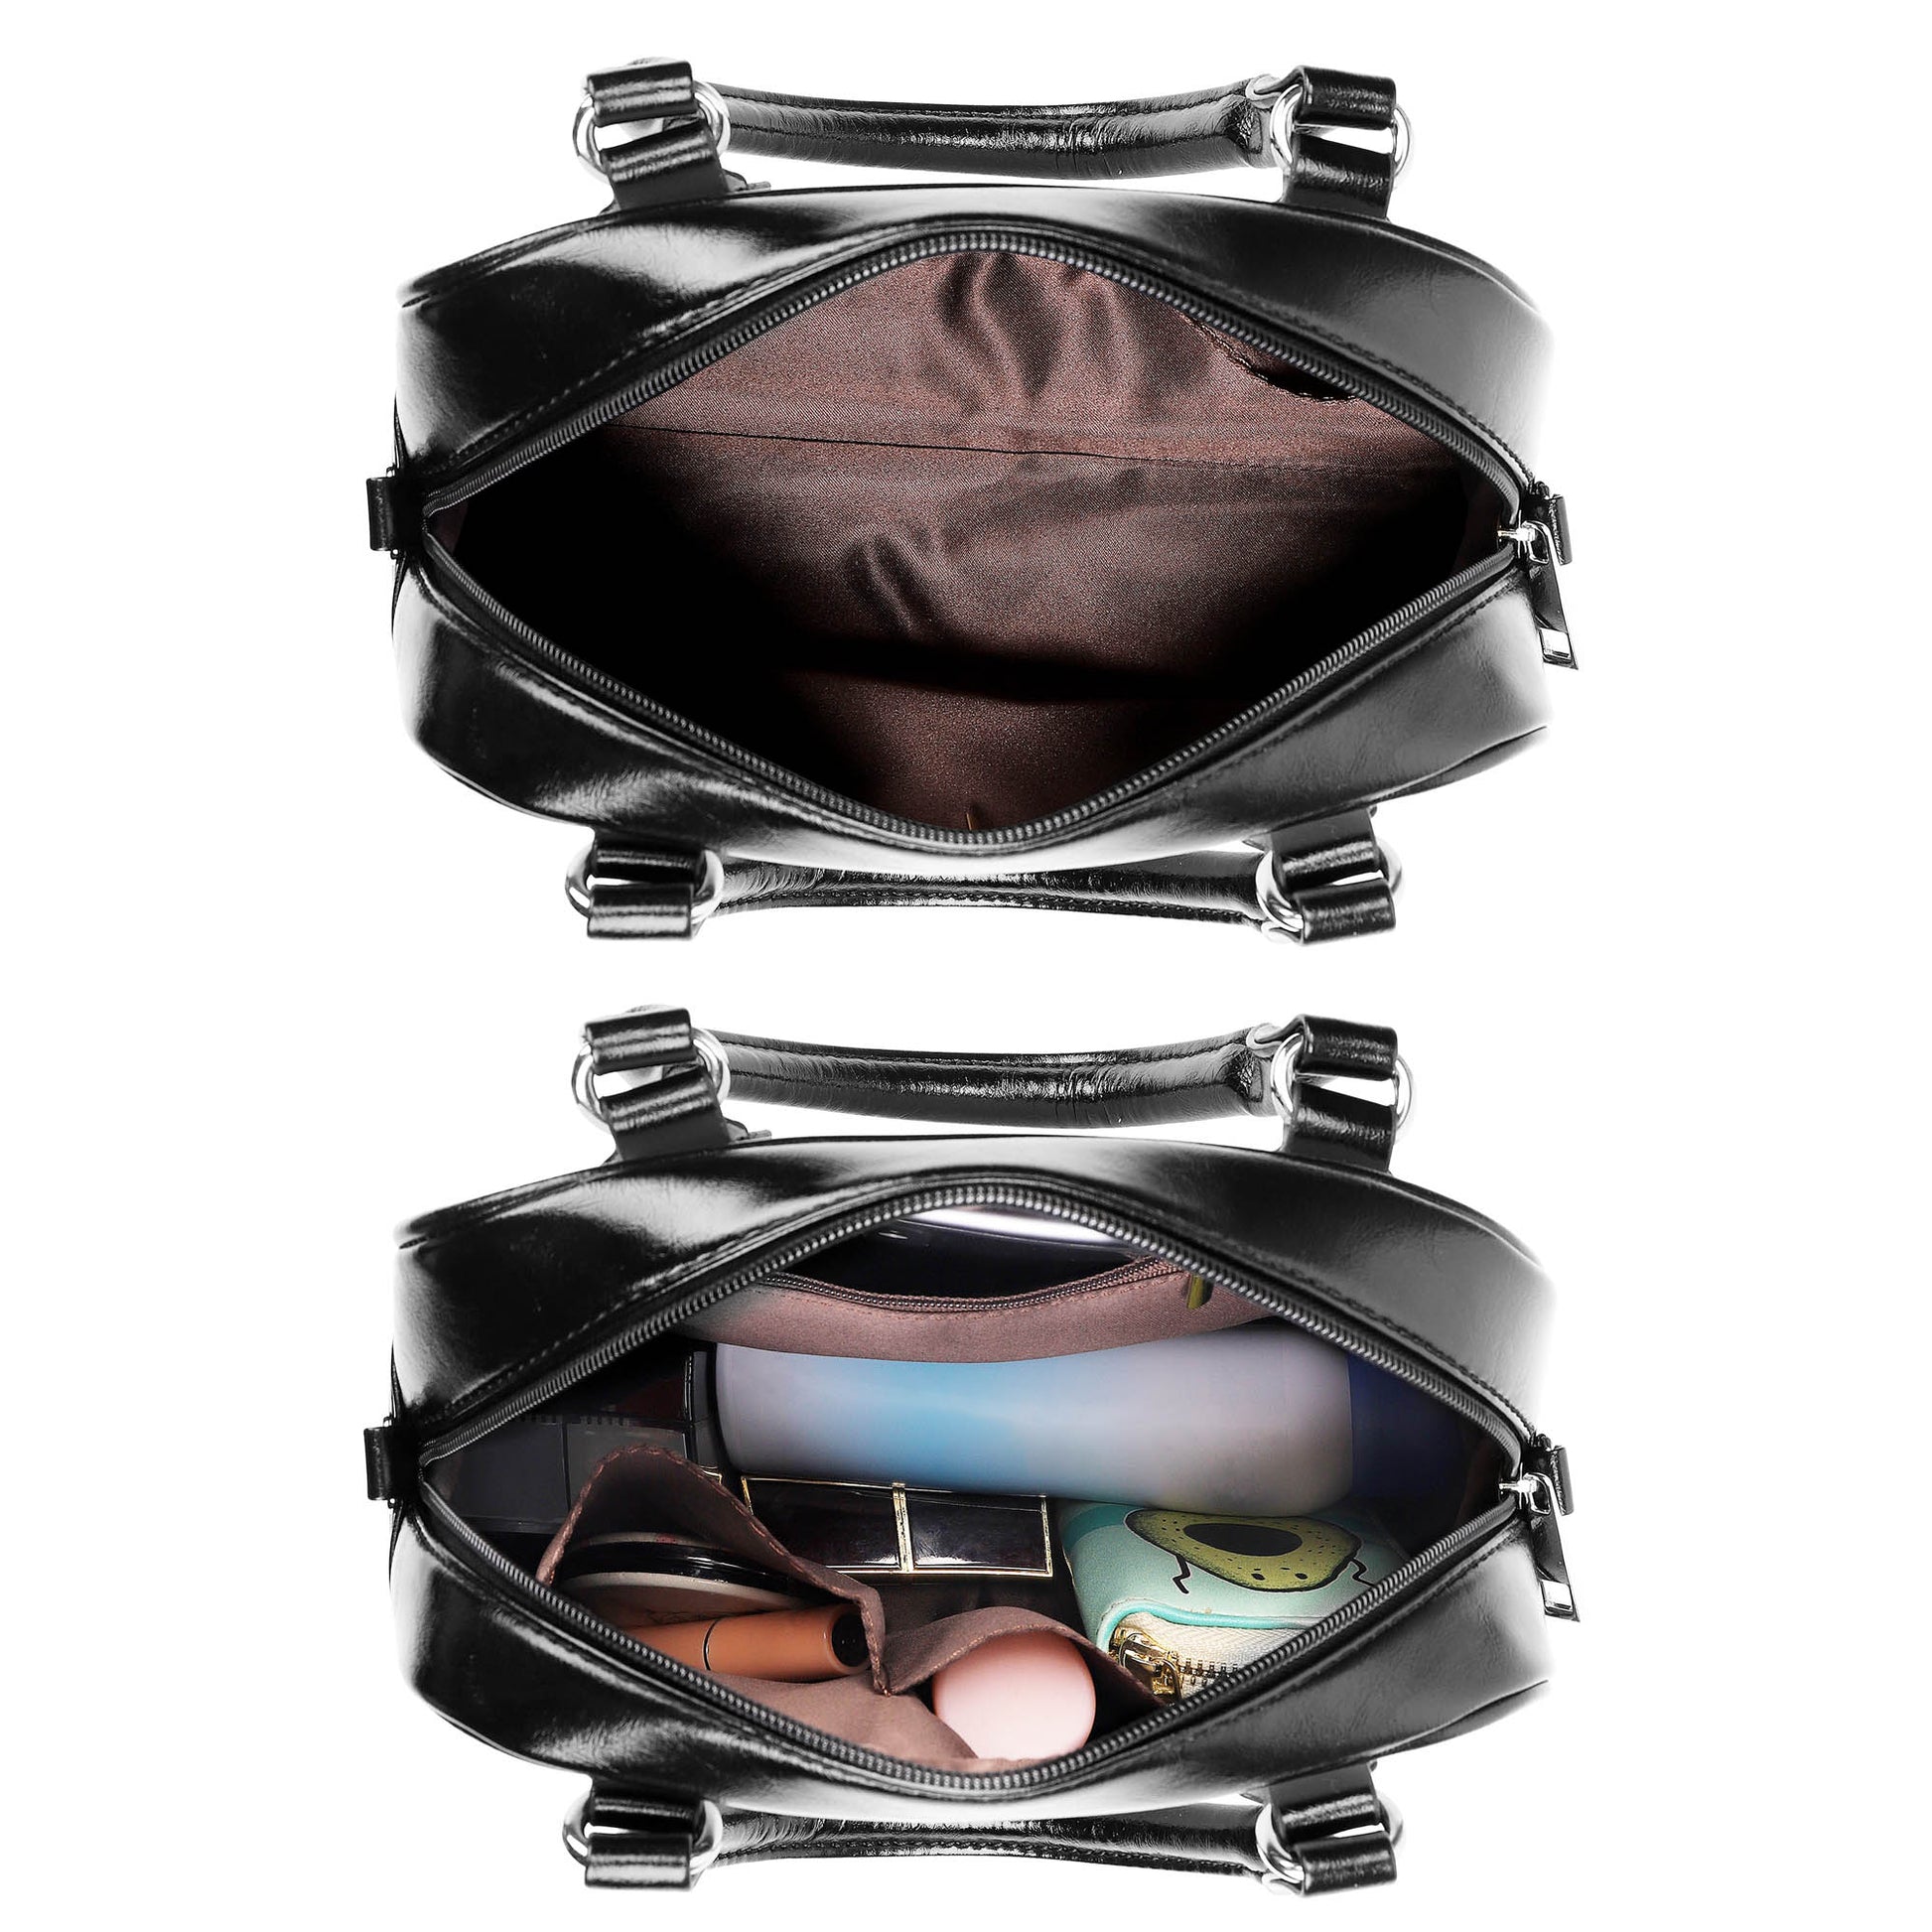 Fairlie Modern Tartan Shoulder Handbags - Tartanvibesclothing